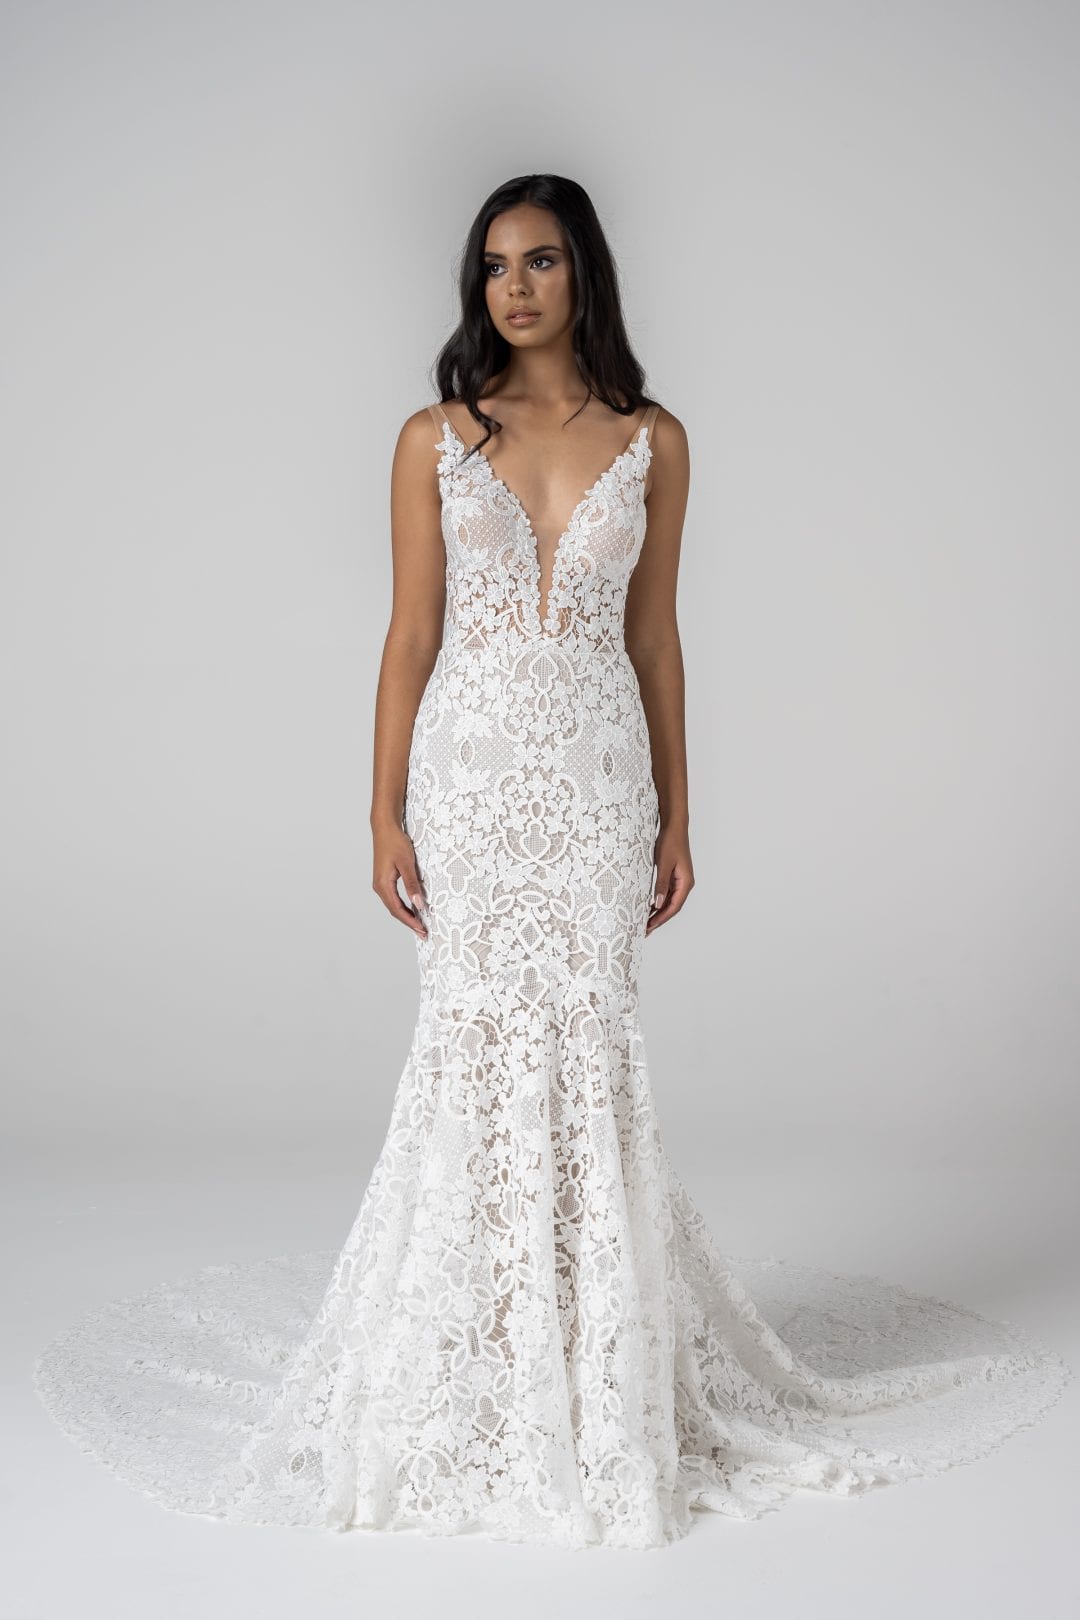 Shop For Wedding Dress NZ | Jessica Bridal Couture